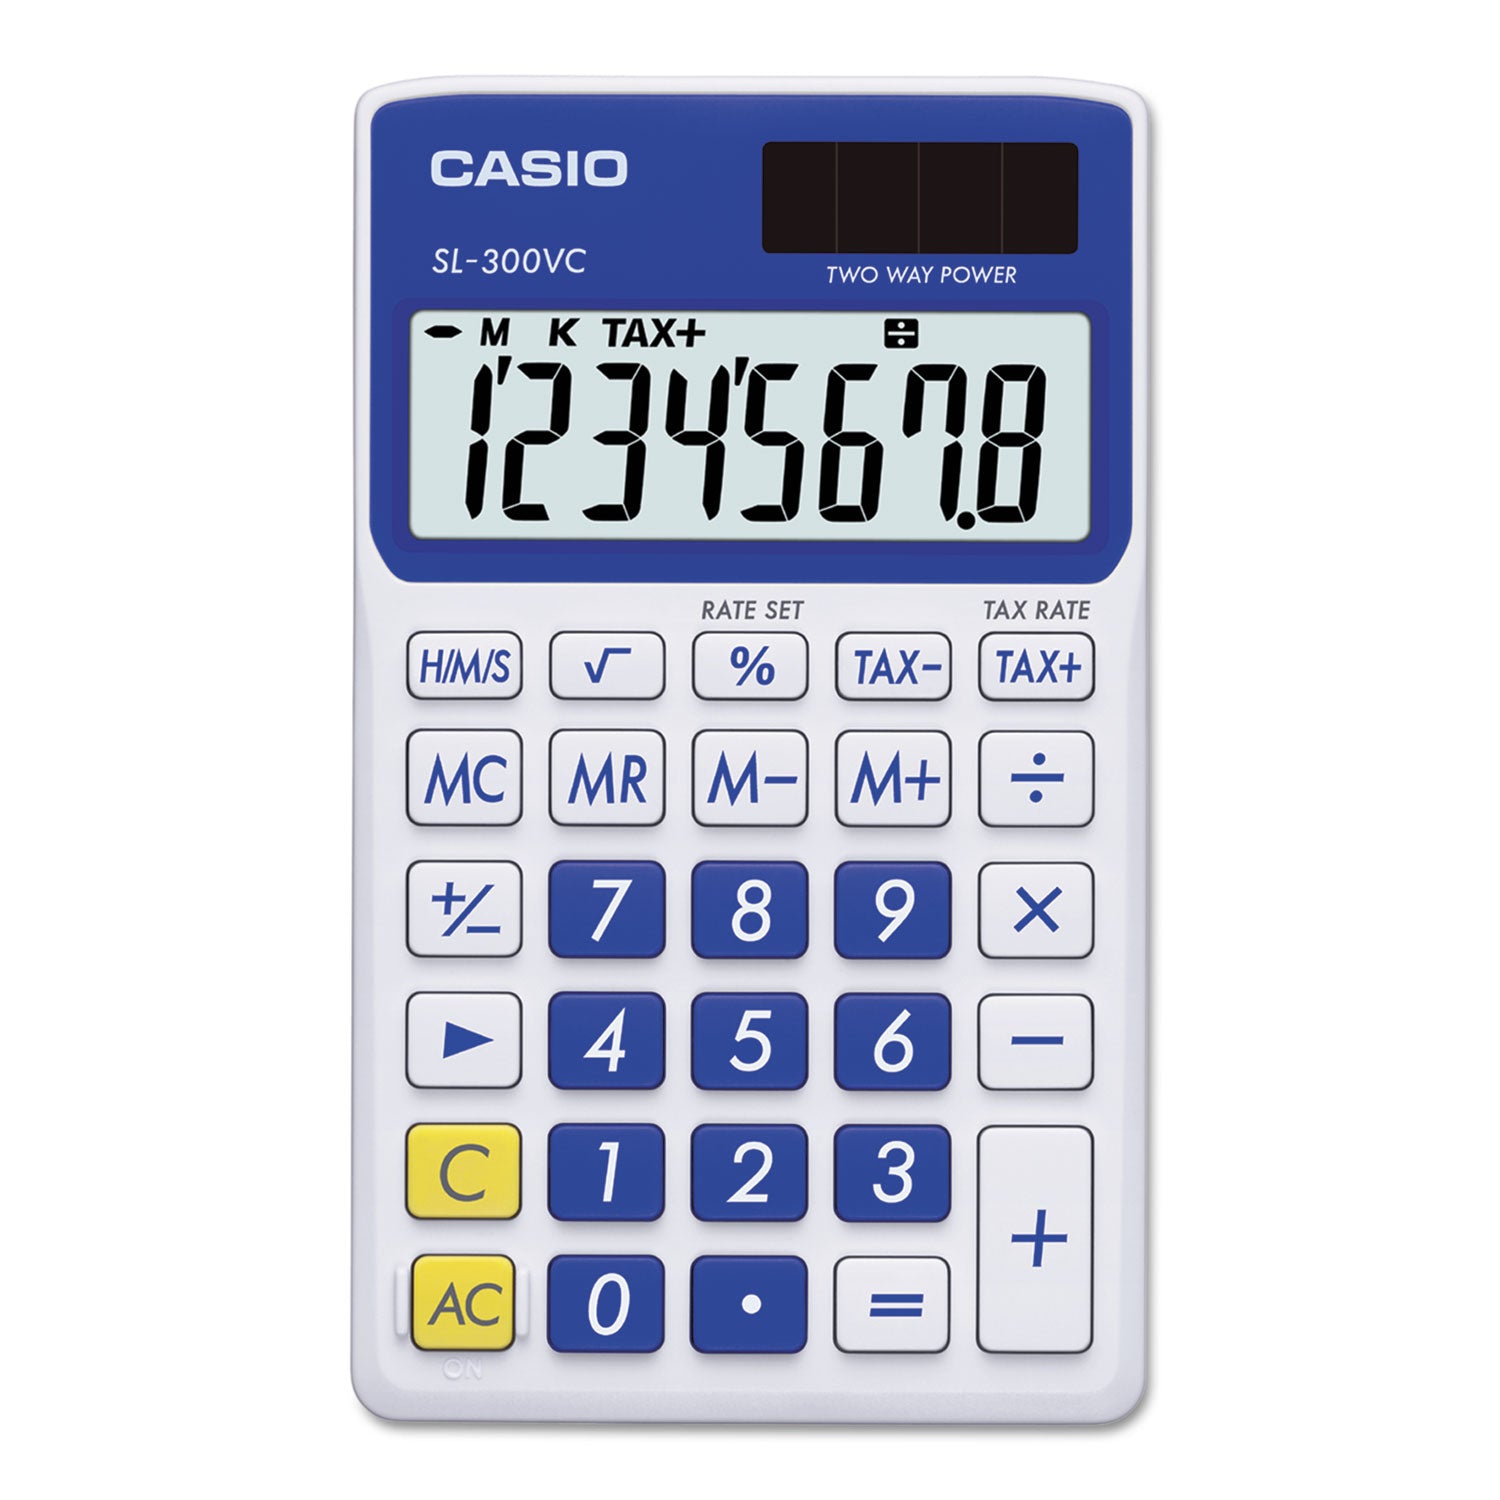 sl-300svcbe-handheld-calculator-8-digit-lcd-blue_csosl300vcbe - 1